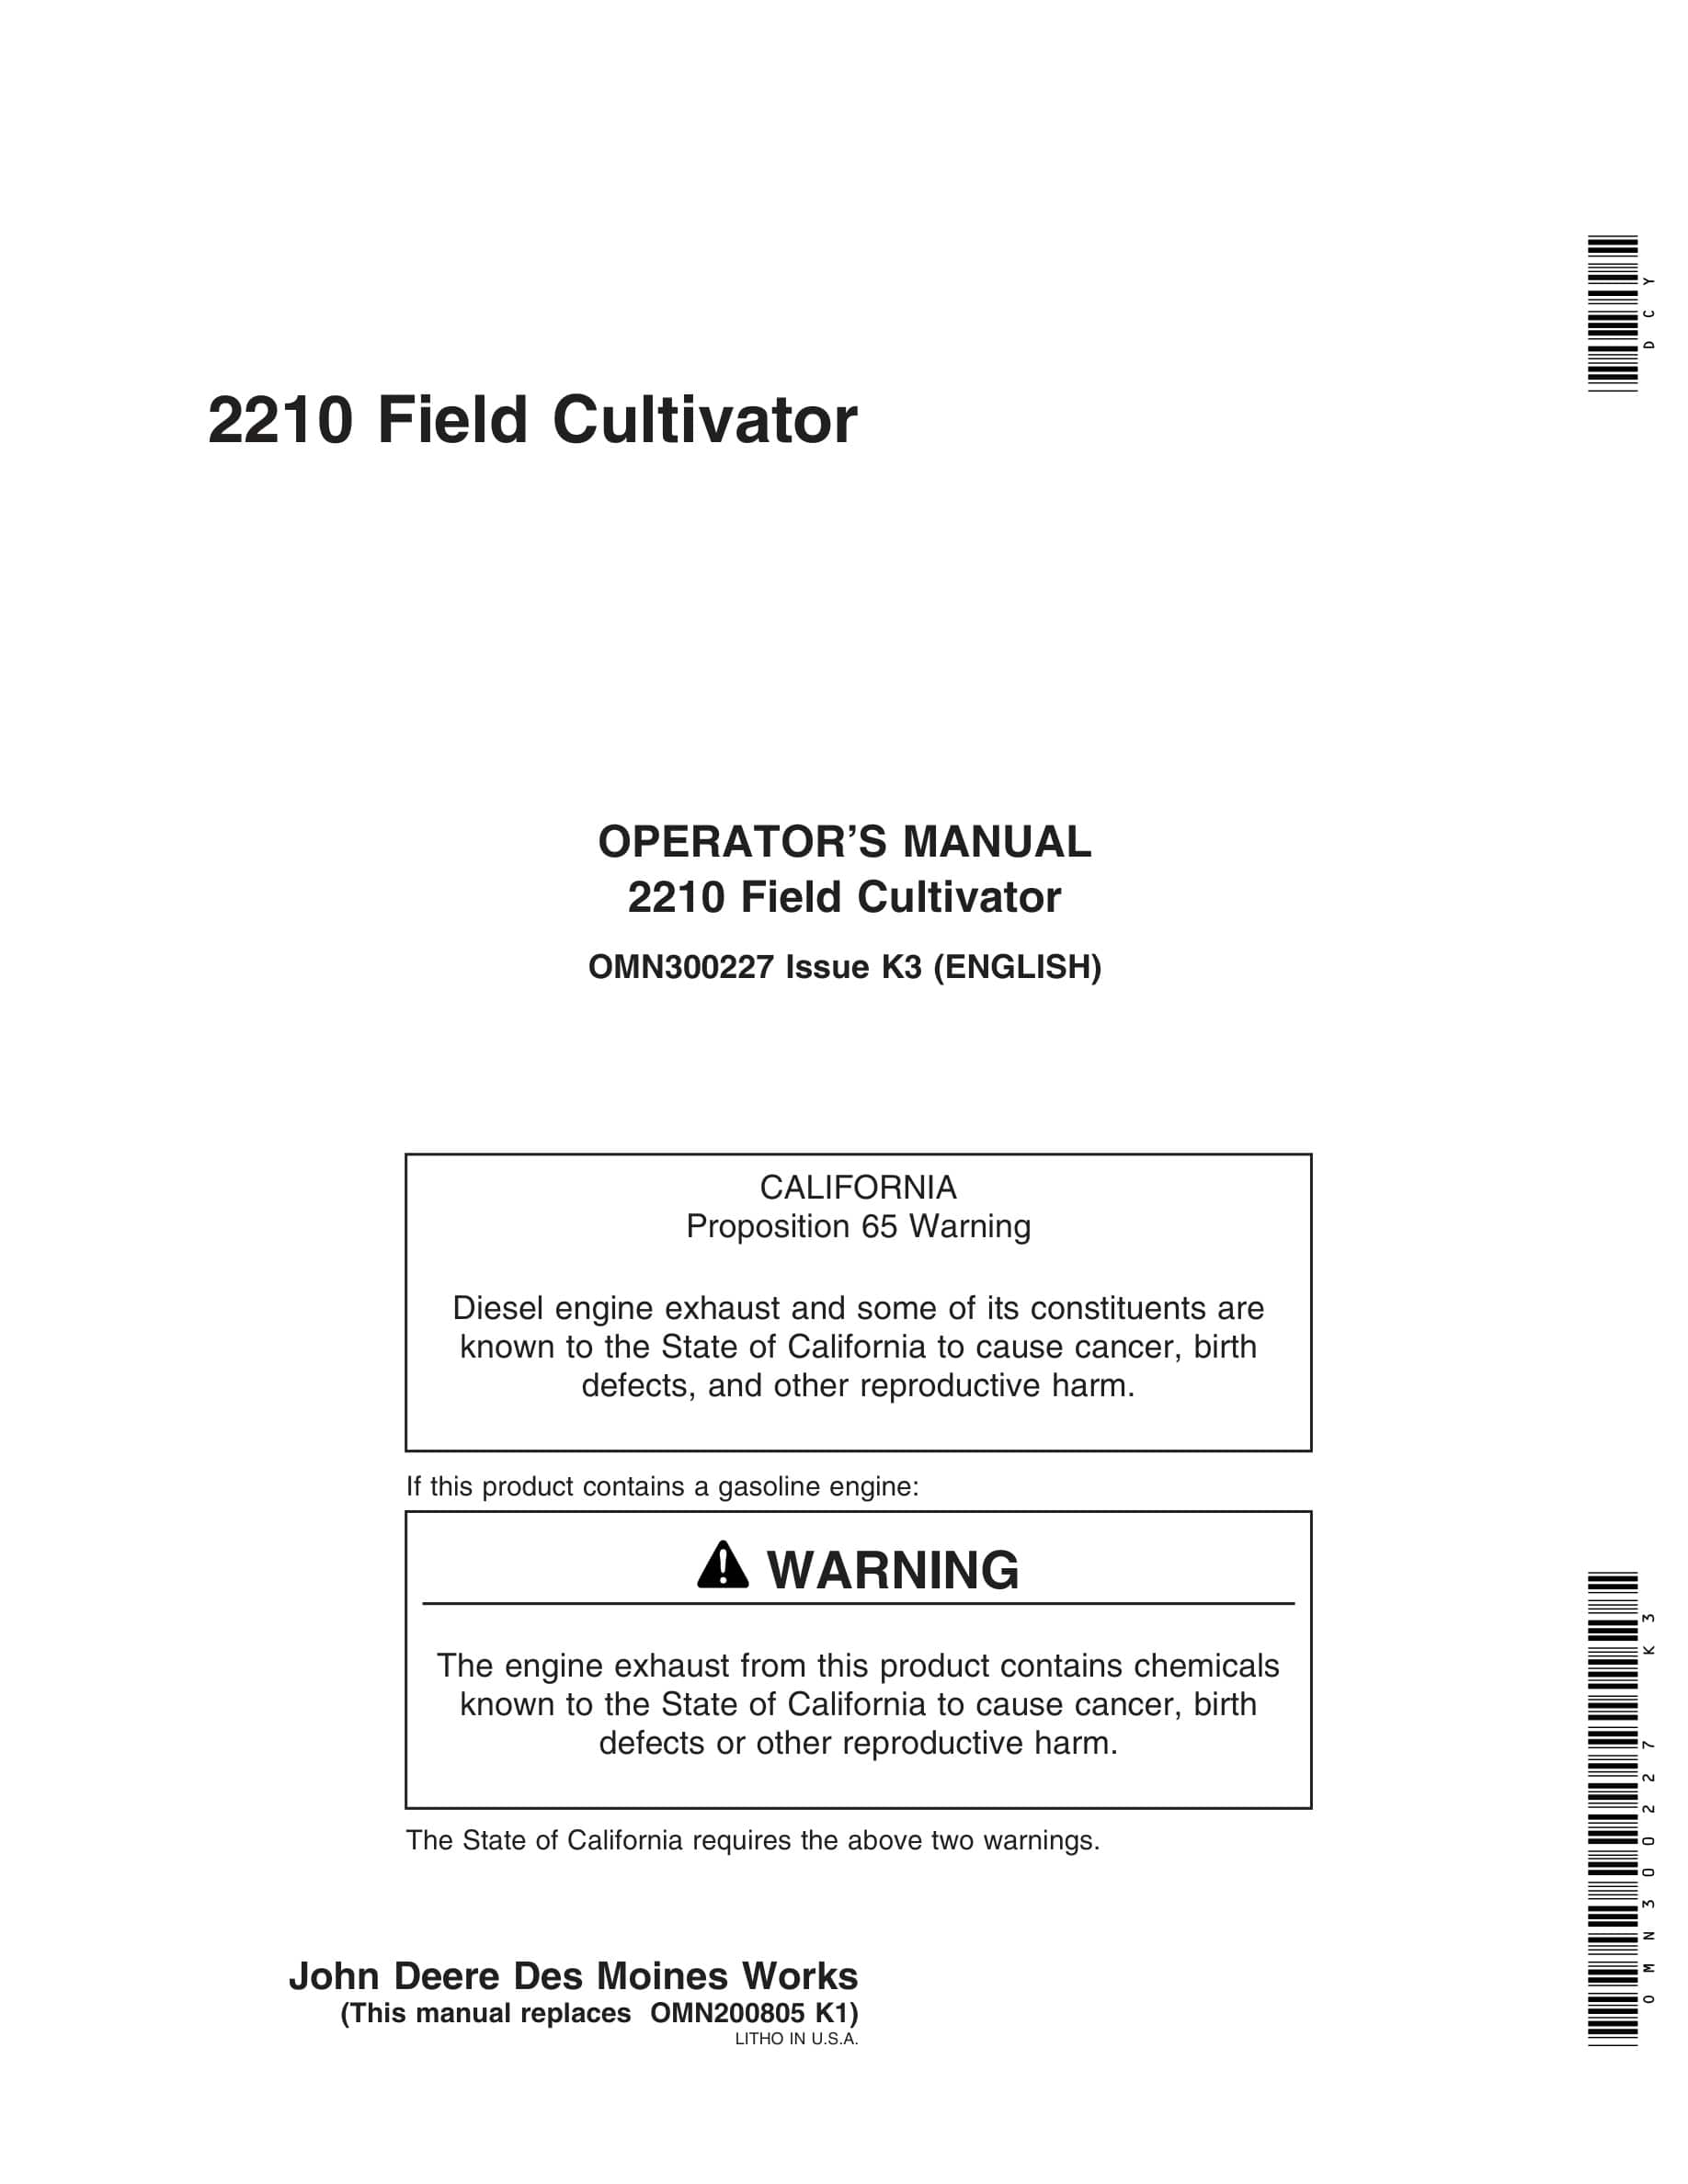 John Deere 2210 Field Cultivator Operator Manual OMN300227-1